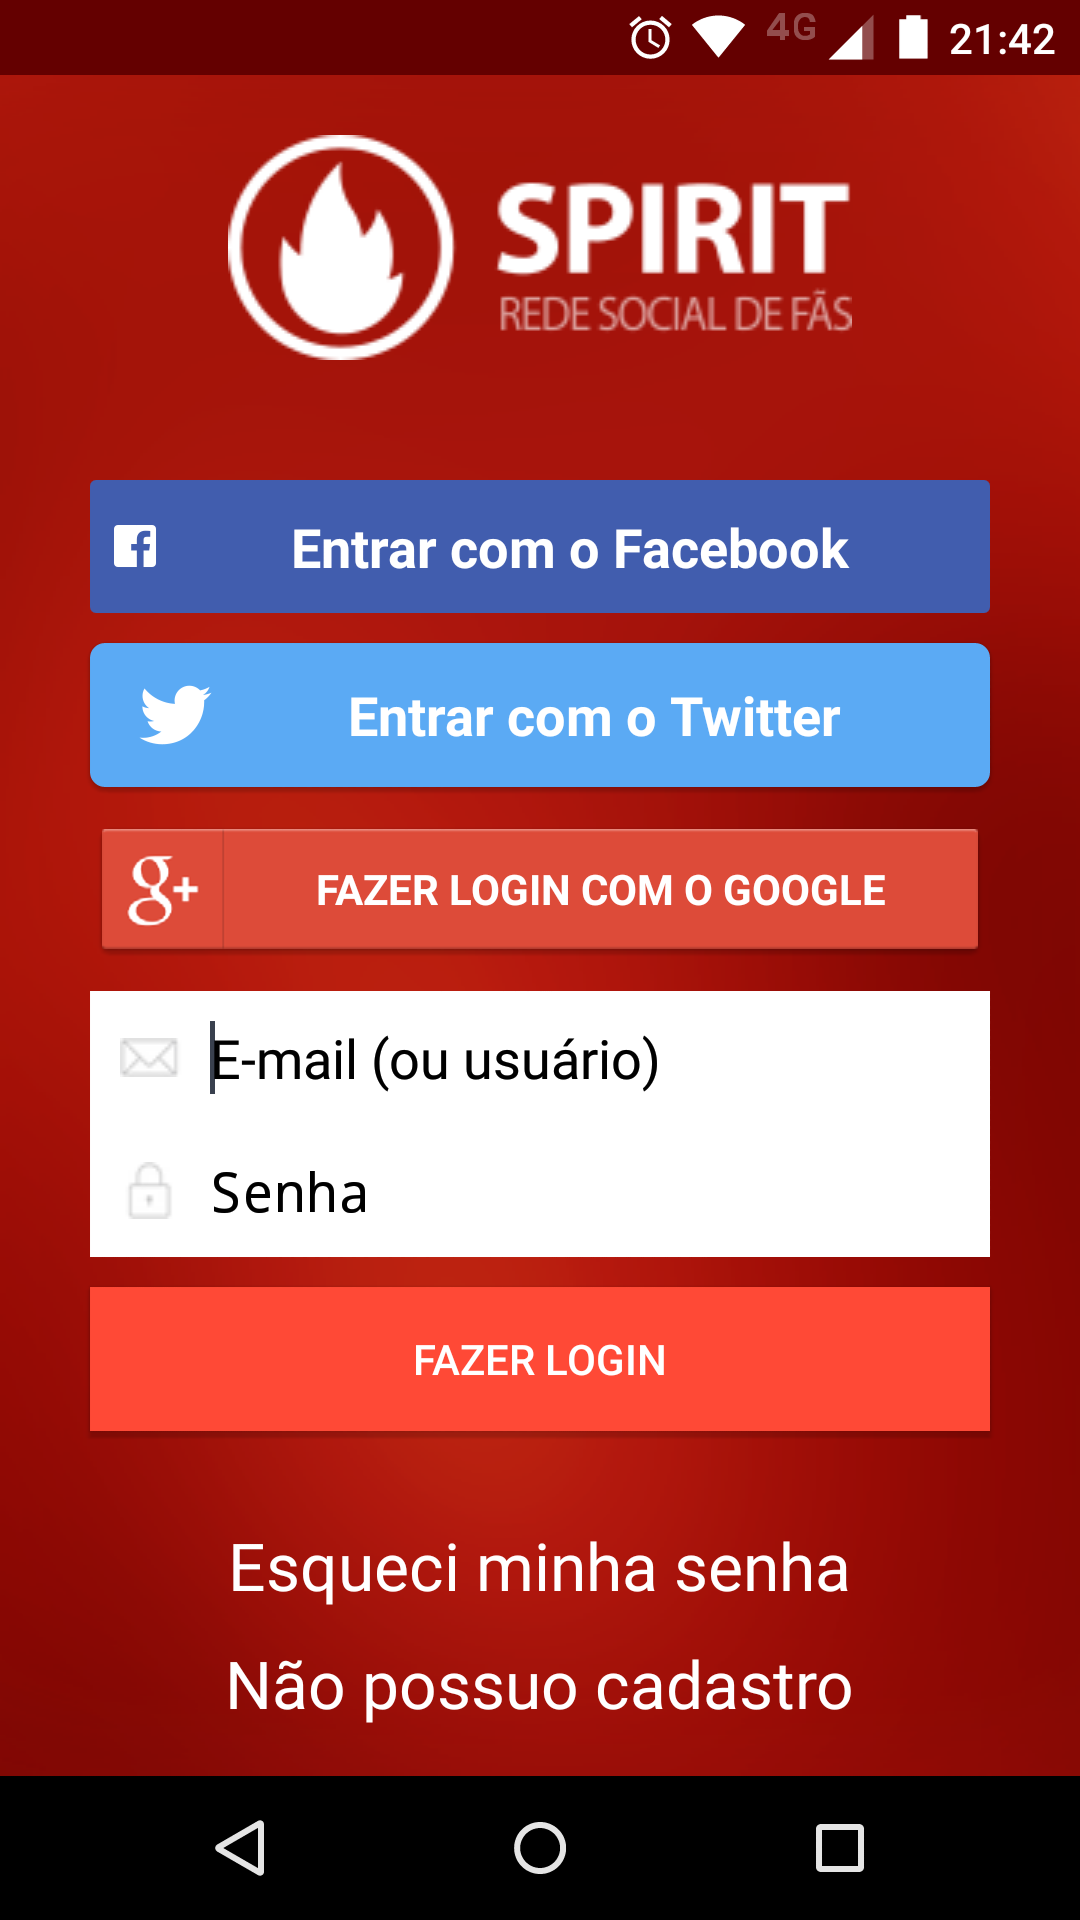 Android application Spirit Rede Social de Fãs screenshort